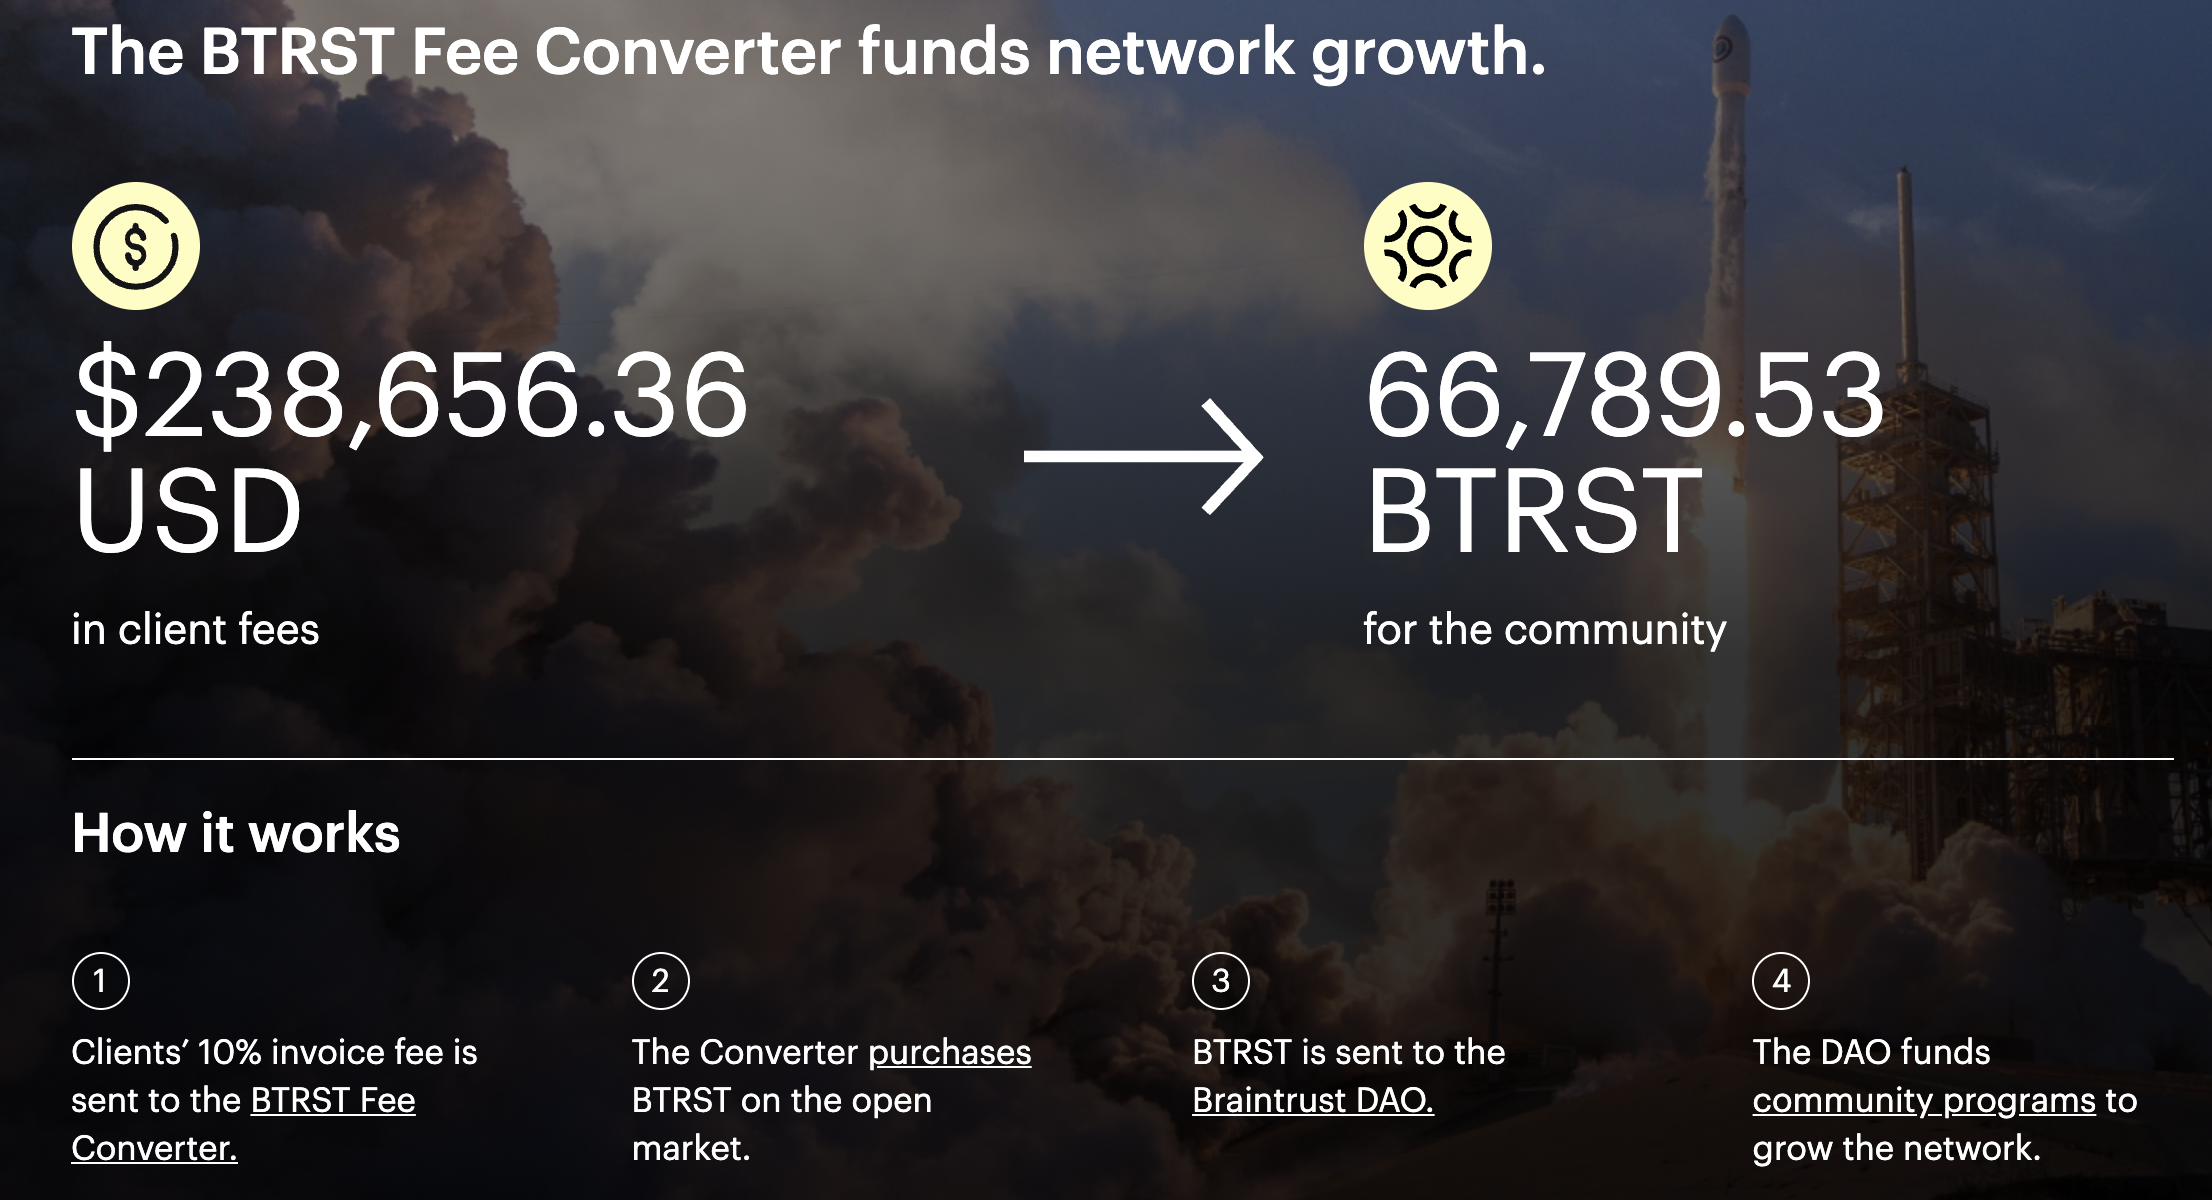 The BTRST Fee Converter stats